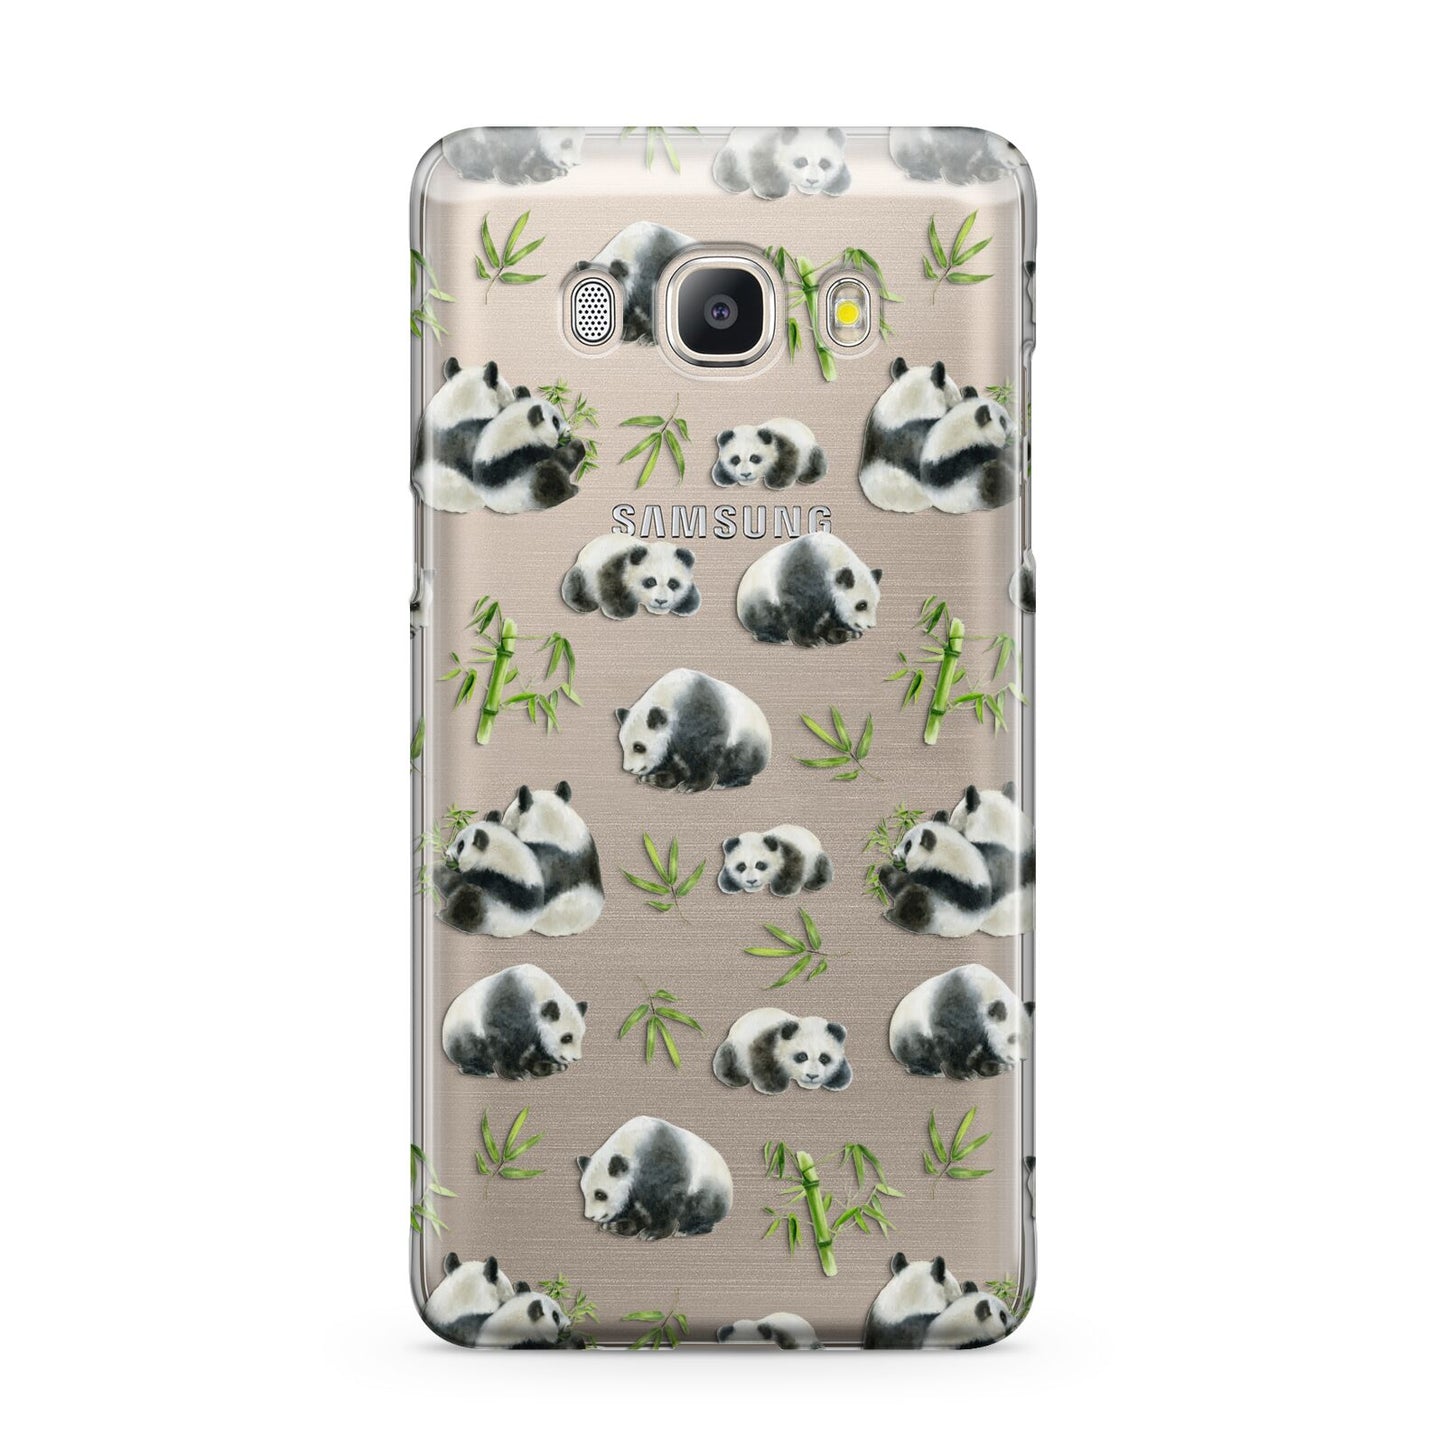 Panda Samsung Galaxy J5 2016 Case